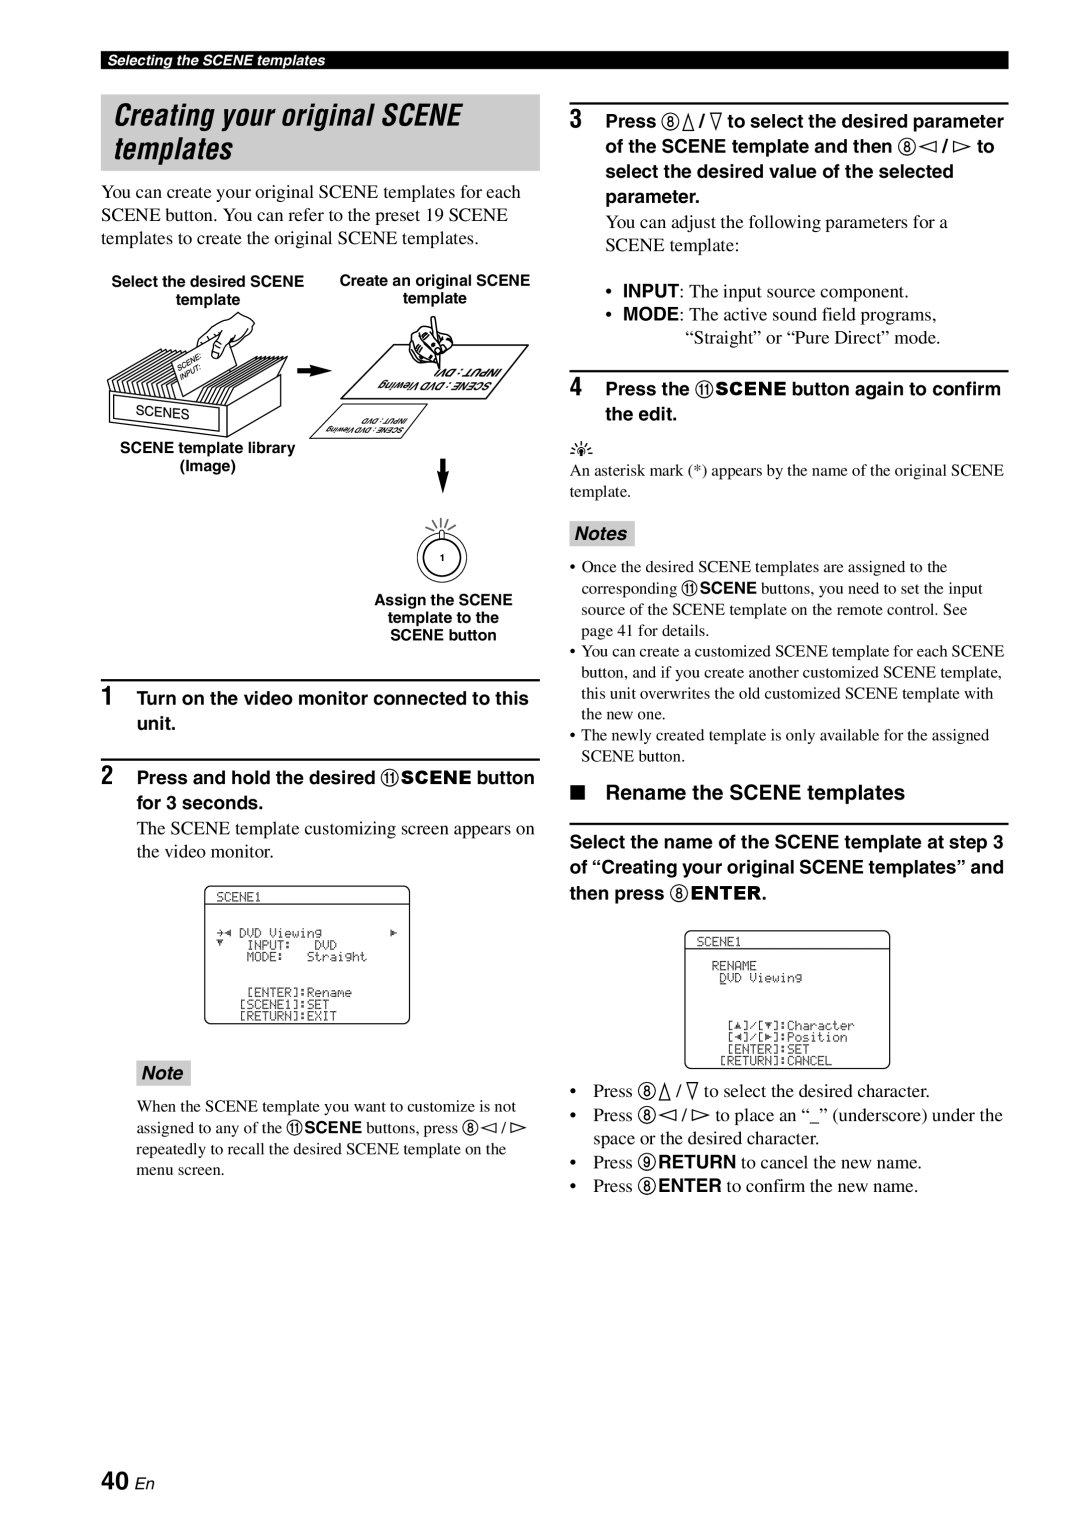 Yamaha HTR-6180 owner manual Creating your original SCENE templates, 40 En, Rename the SCENE templates, Notes 